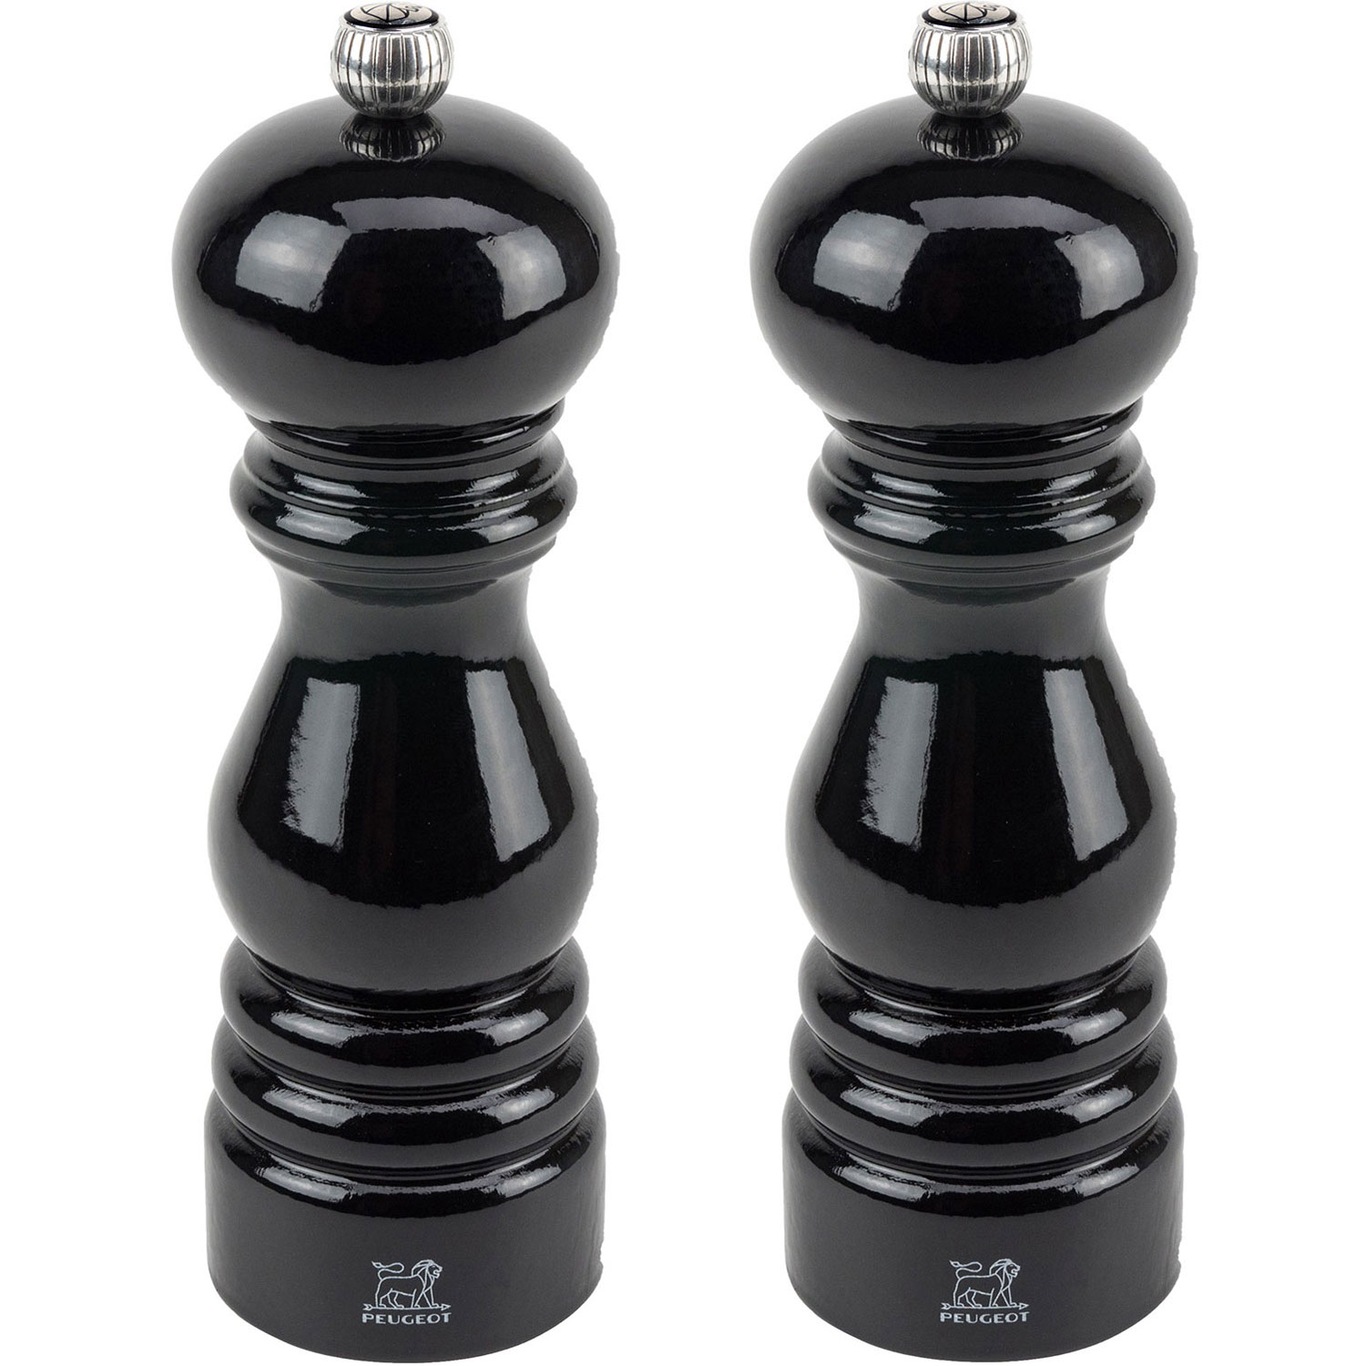 https://royaldesign.com/image/2/peugeot-paris-uselect-salt-and-pepper-mill-set-2-pack-18-cm-black-0?w=800&quality=80